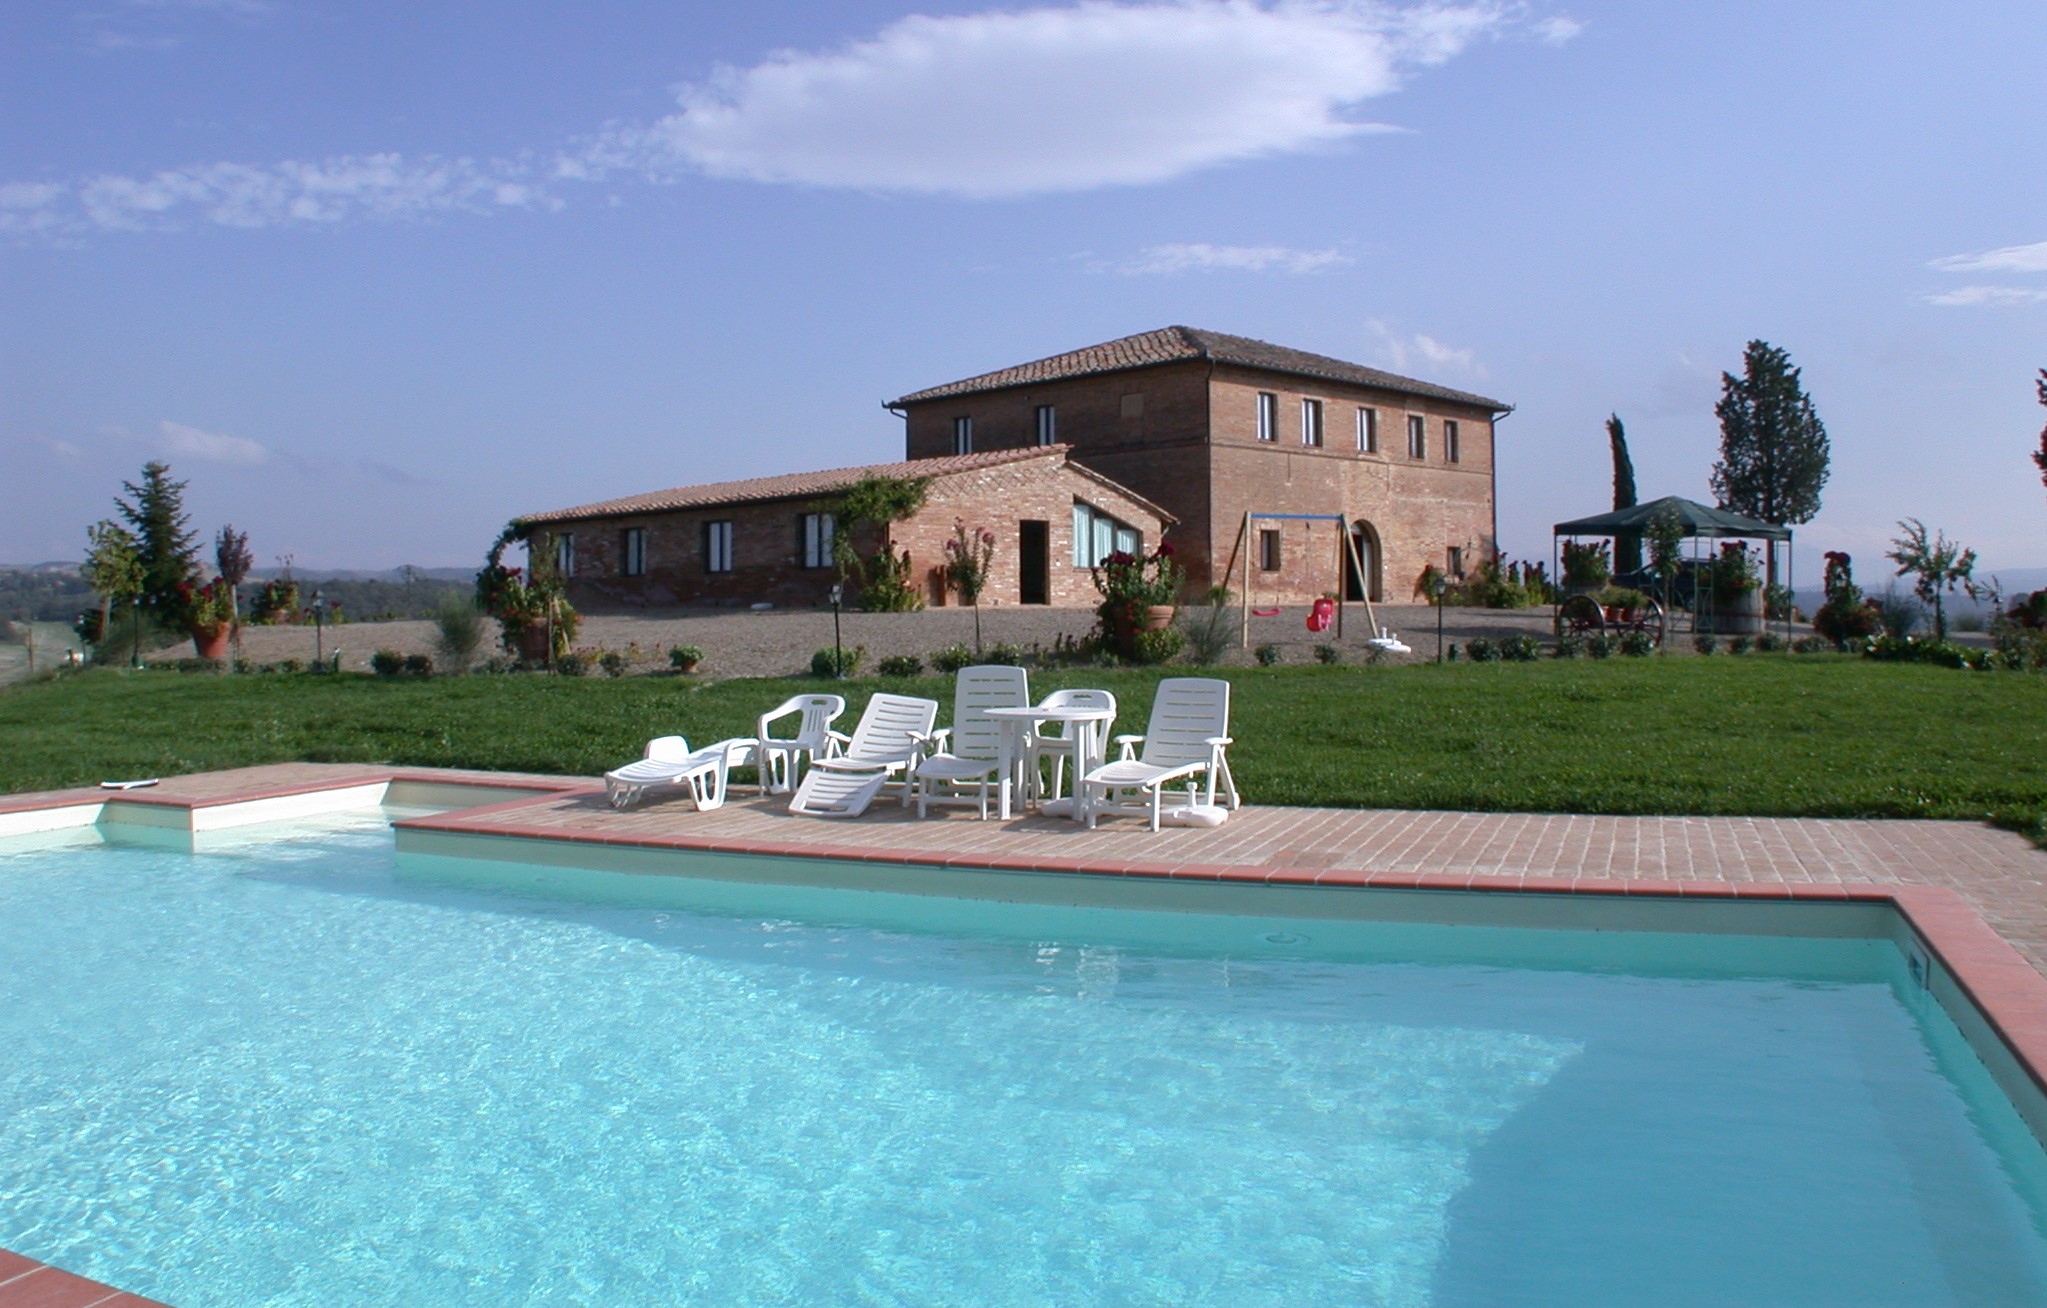 63_Agriturismo, vakantiehuis met zwembad, Toscane, Siena, Buonconvento, San Lorenzo, ItaliÃ«, 29